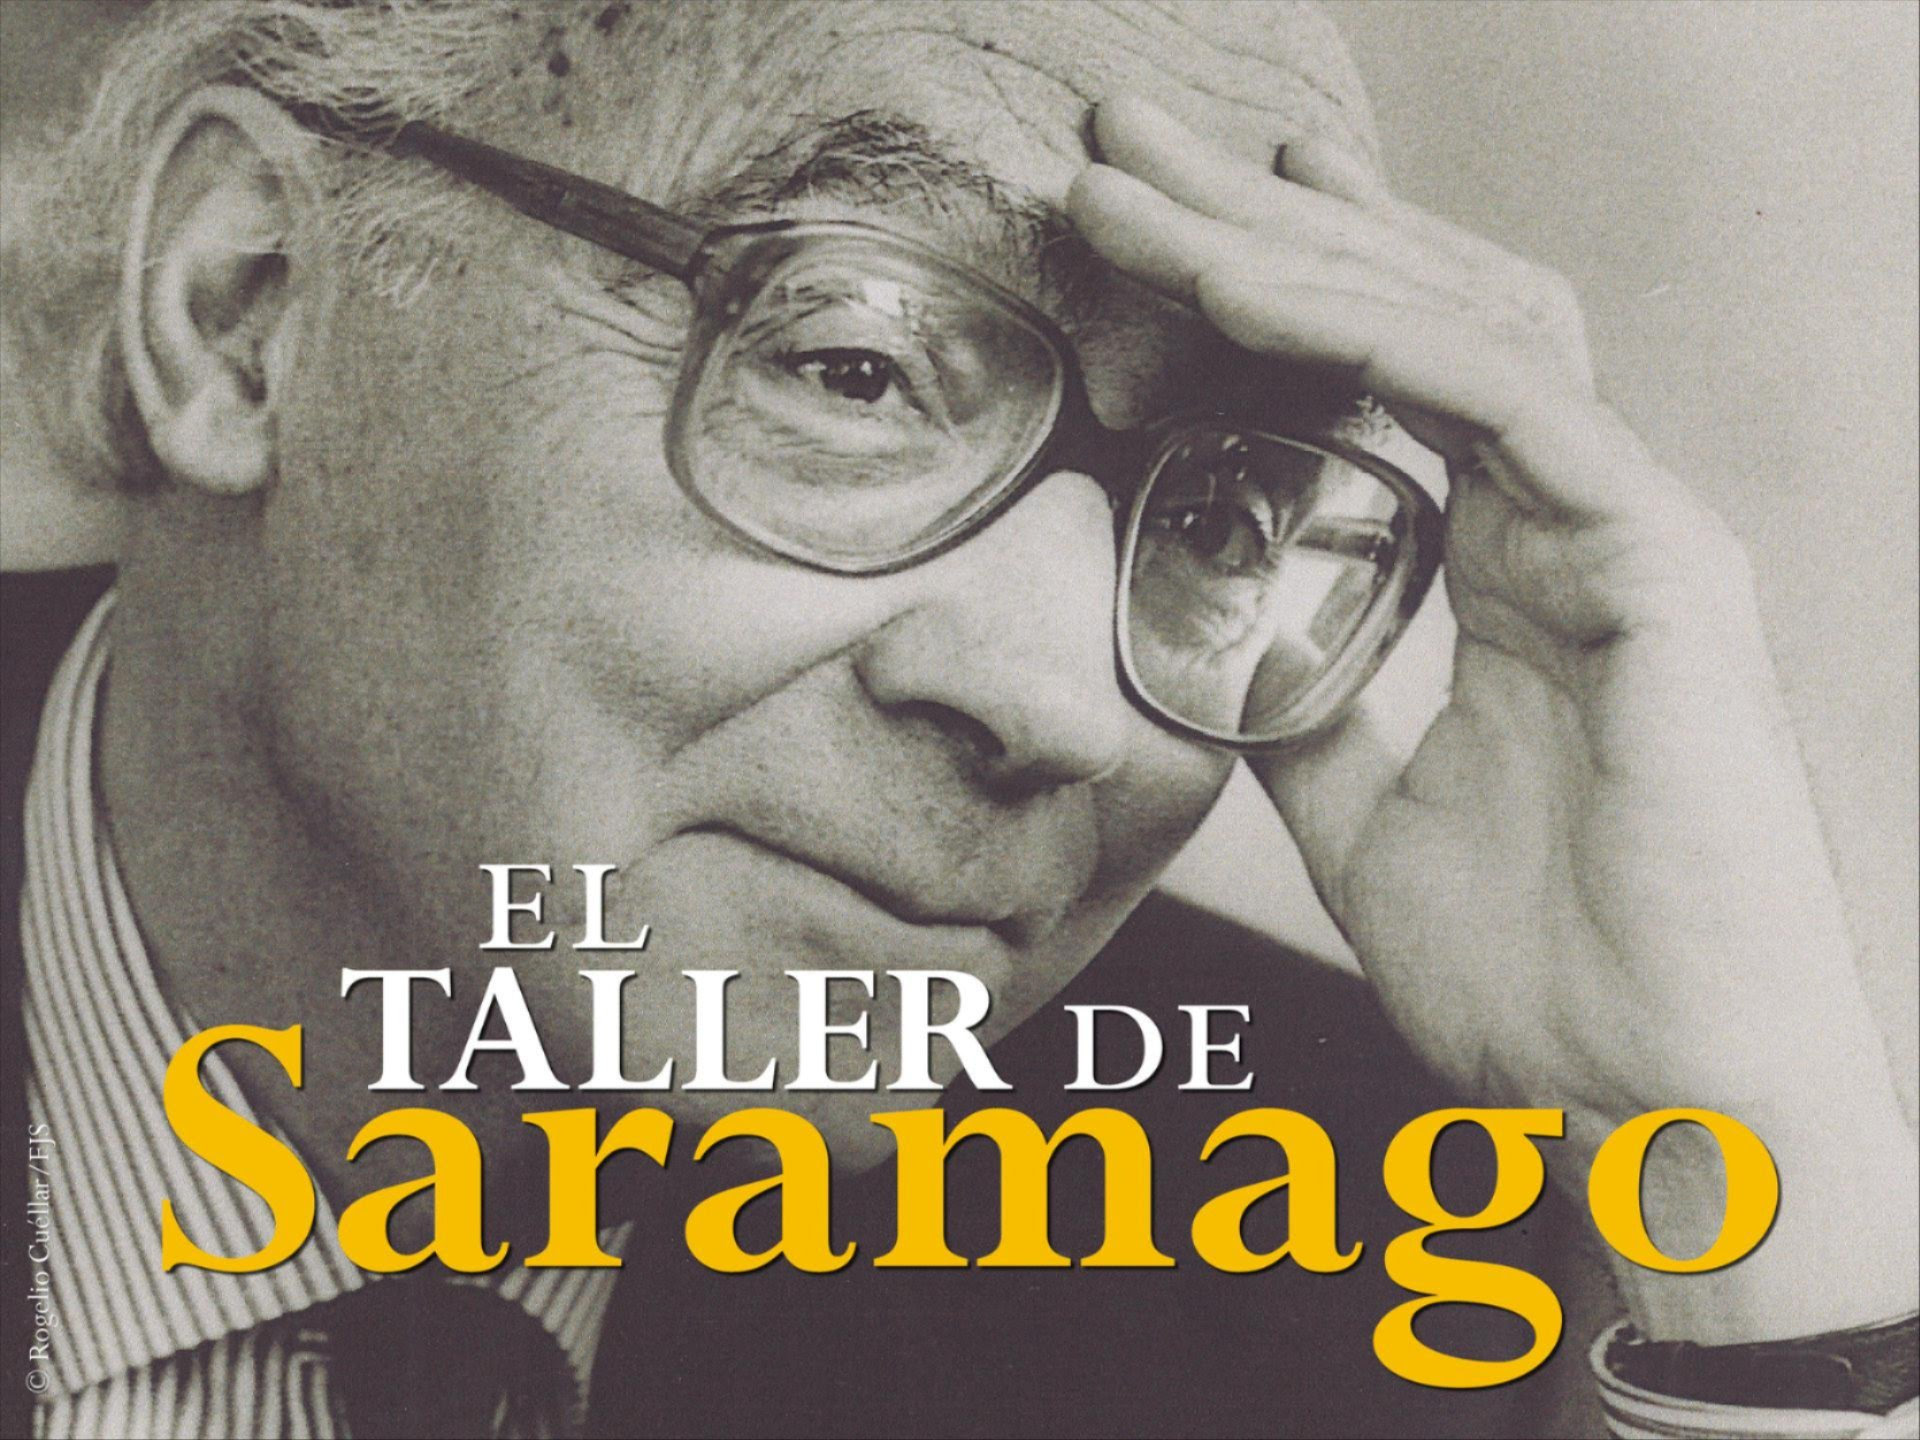 El taller de Saramago